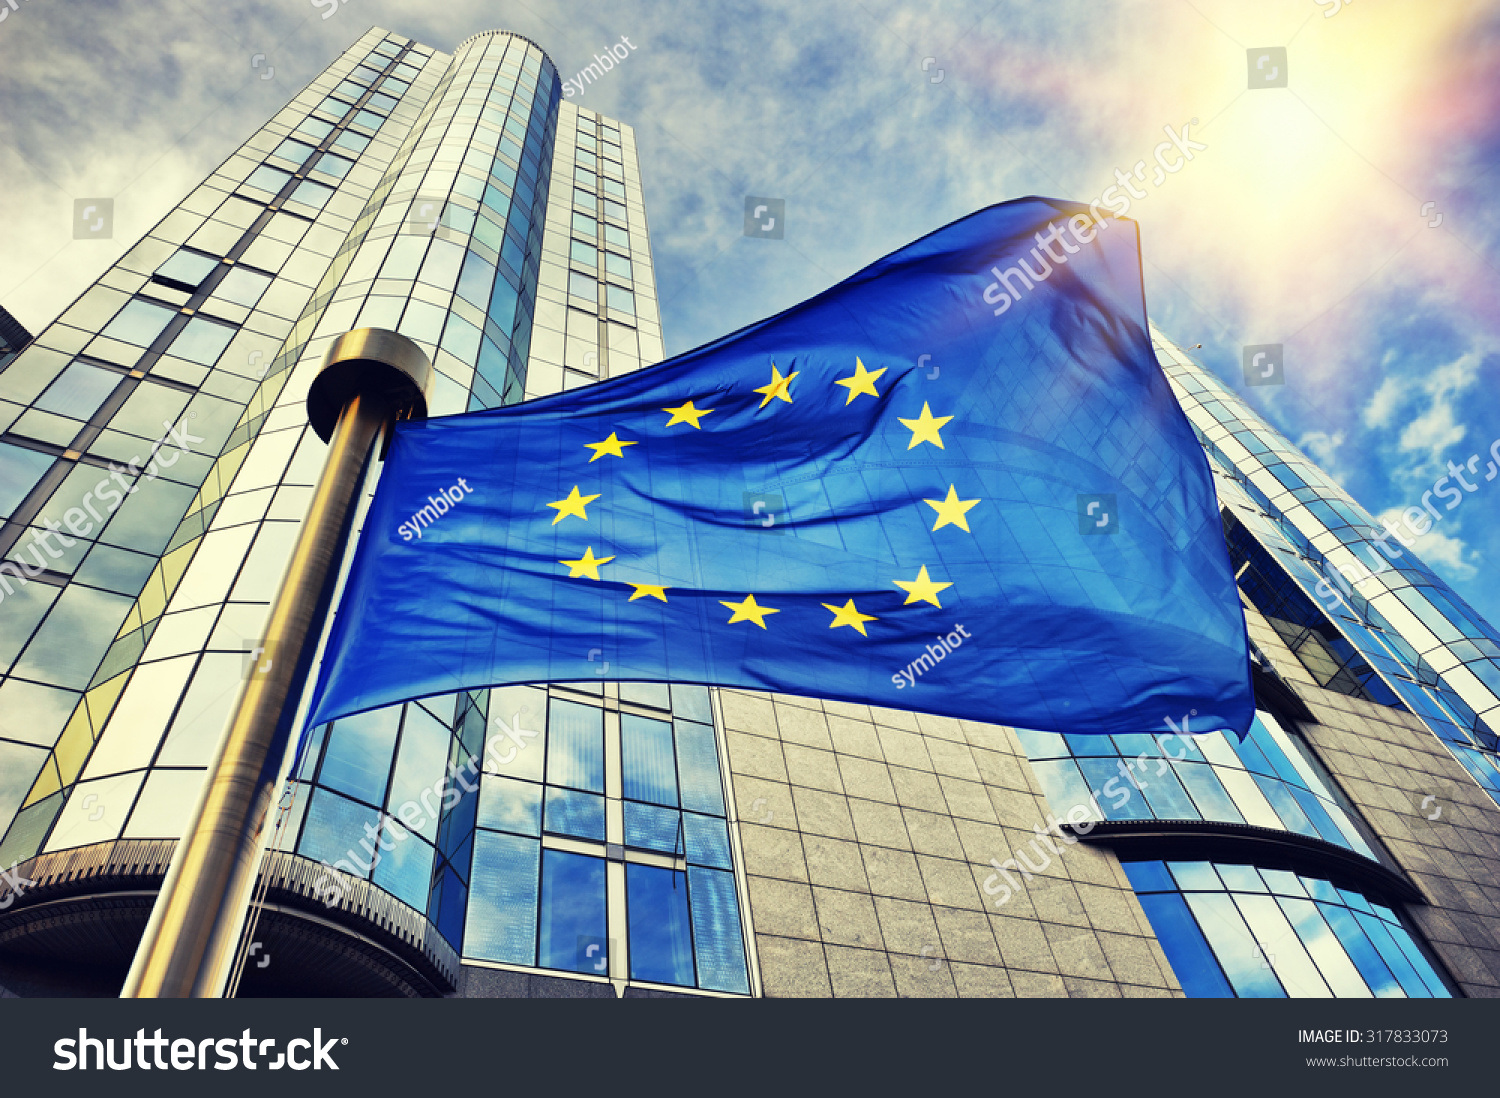 EU flag waving in front of European Parliament building. Brussels, Belgium #317833073